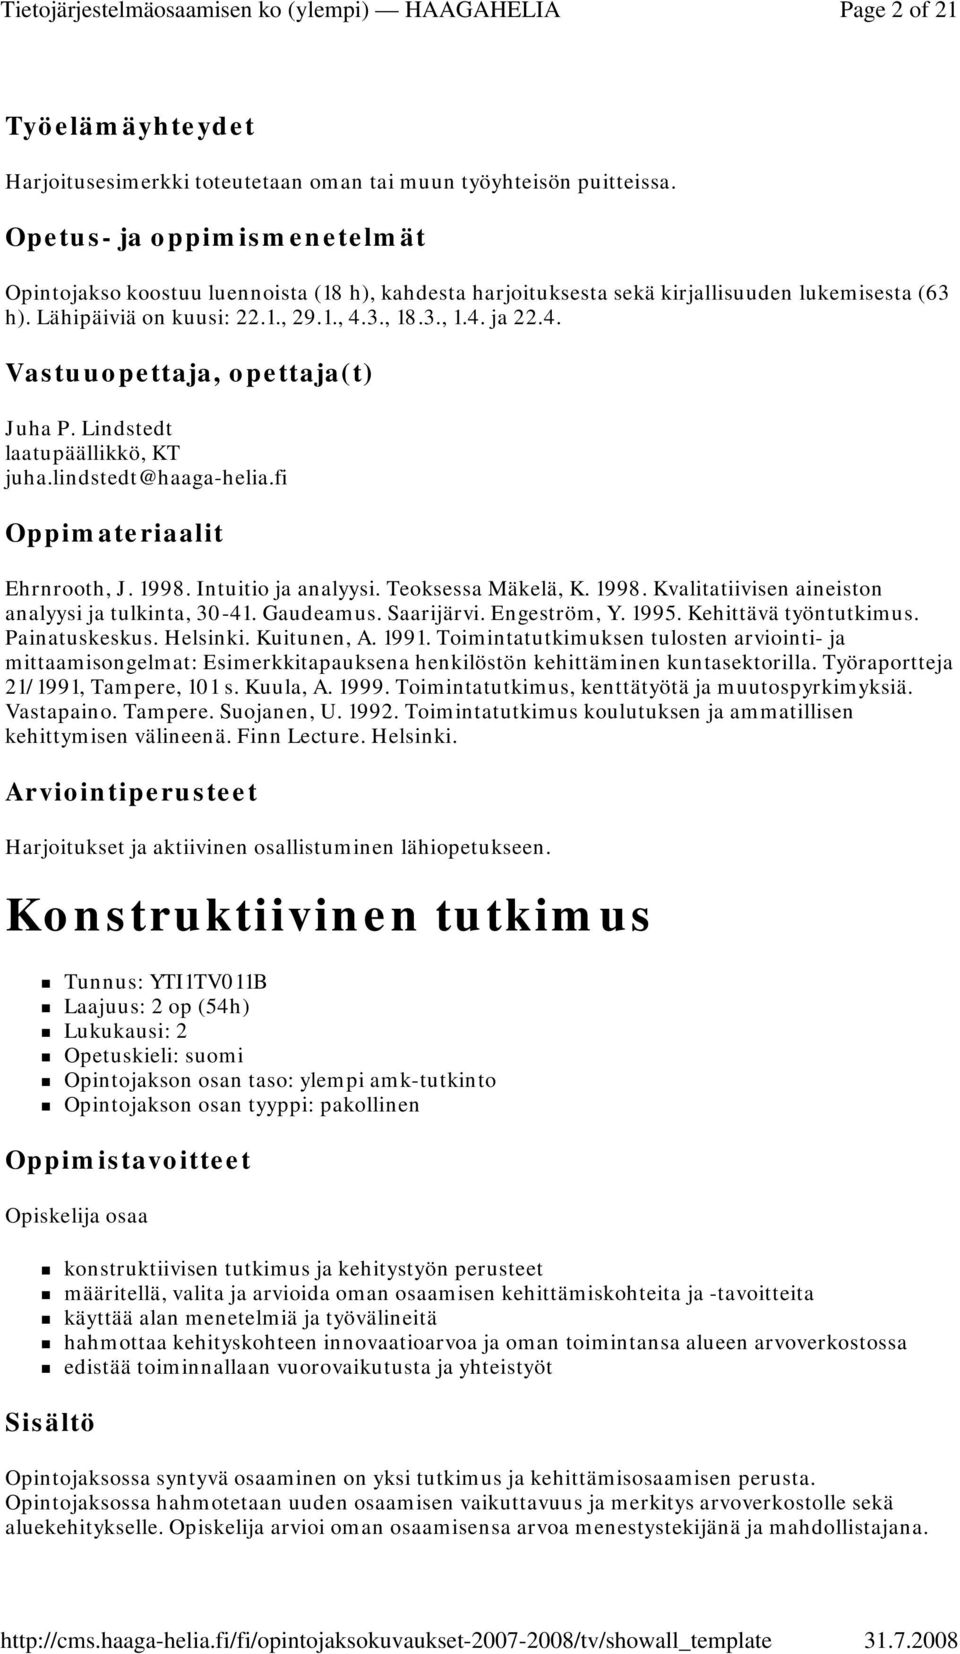 Lindstedt laatupäällikkö, KT juha.lindstedt@haaga-helia.fi Ehrnrooth, J. 1998. Intuitio ja analyysi. Teoksessa Mäkelä, K. 1998. Kvalitatiivisen aineiston analyysi ja tulkinta, 30-41. Gaudeamus.